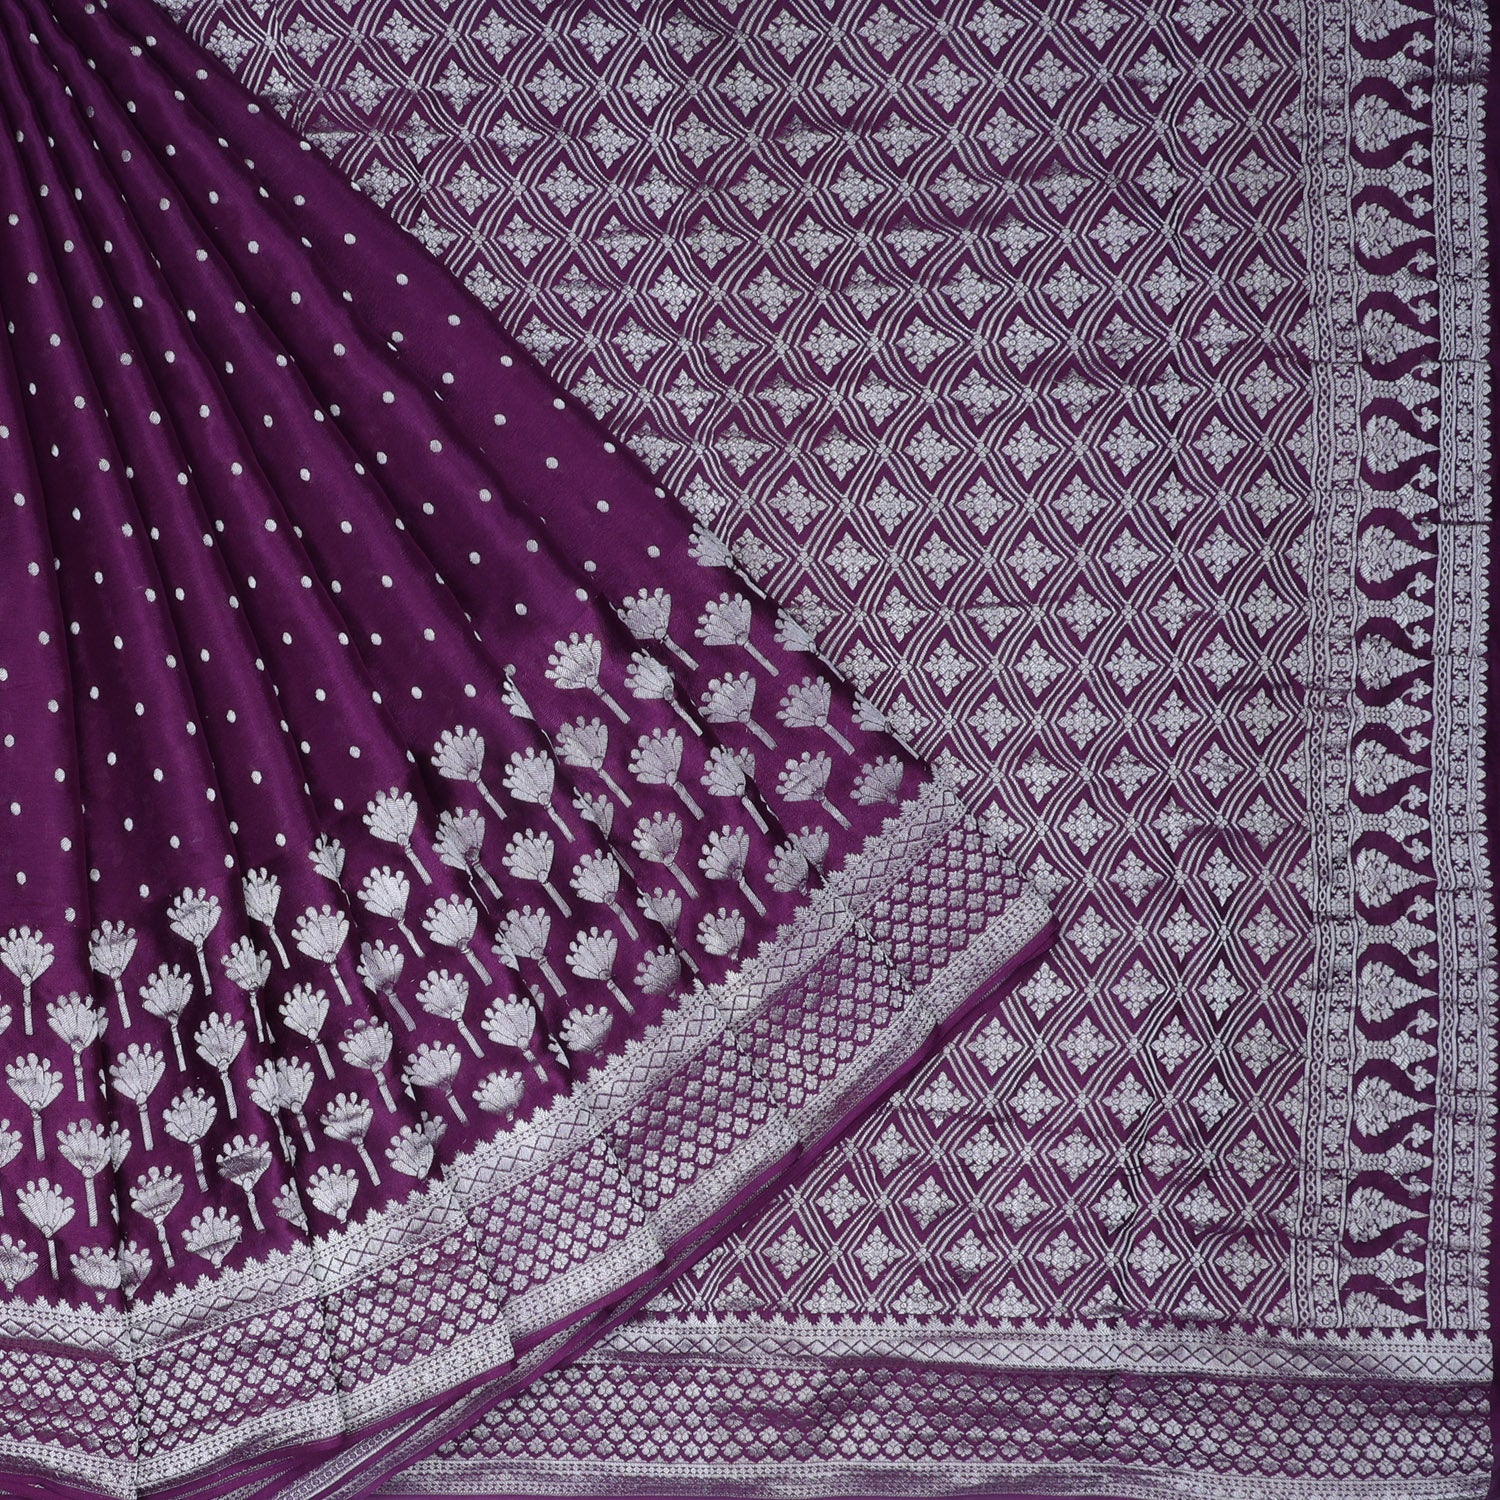 Plum Purple Banarasi Silk Saree With Printed Floral Buttas And Polka Dots - Singhania's